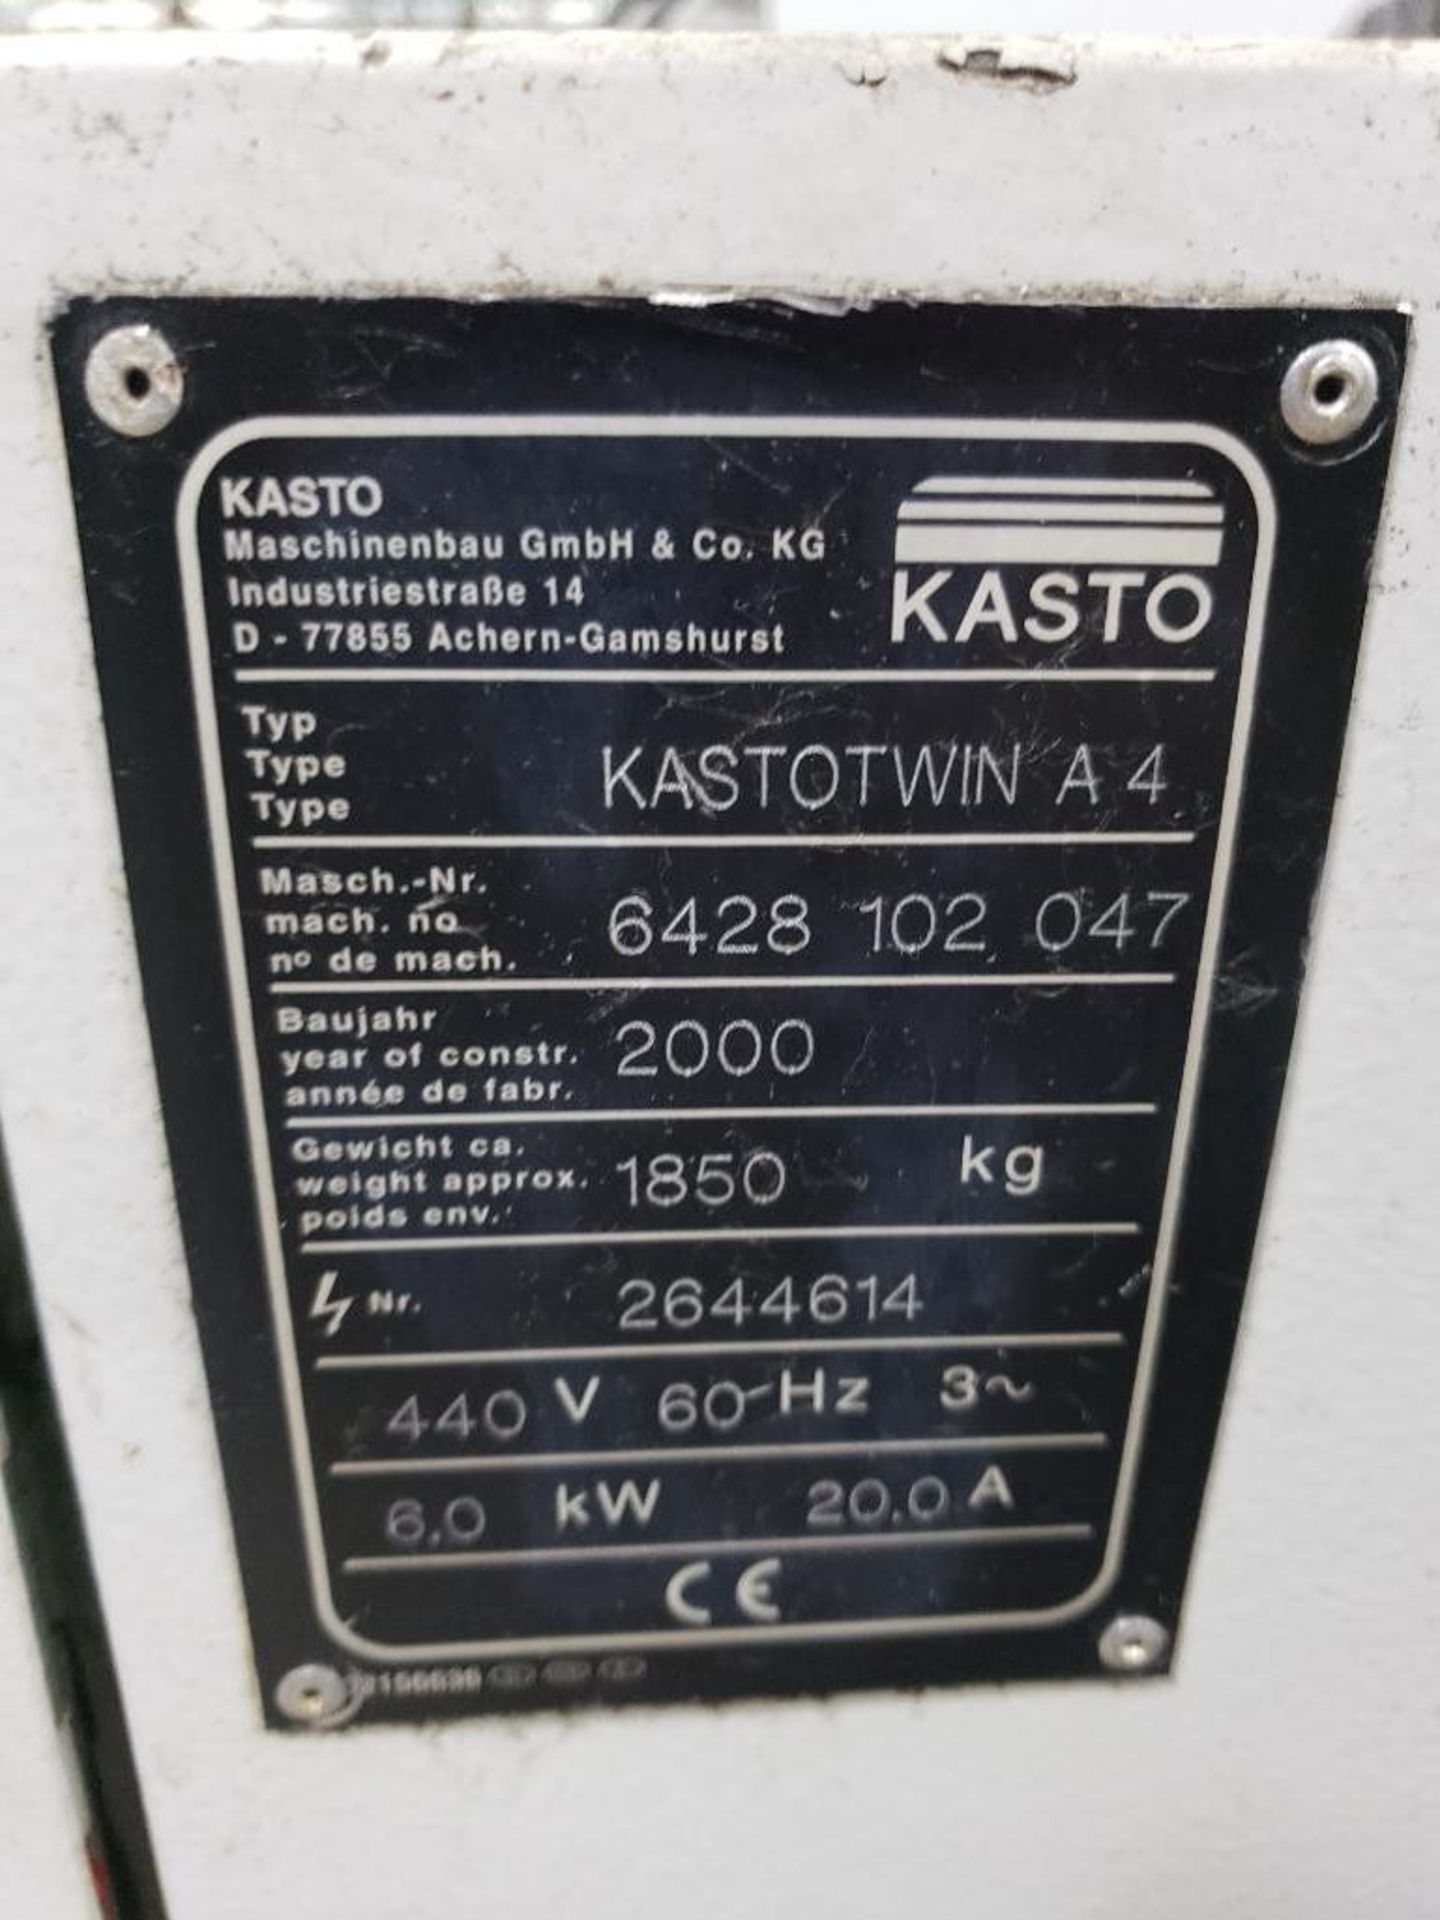 Kasto horizontal CNC band saw Model Kastotwin A4, 3 phase 440v, Mfg year 2000. Serial # 6428102047. - Image 20 of 32